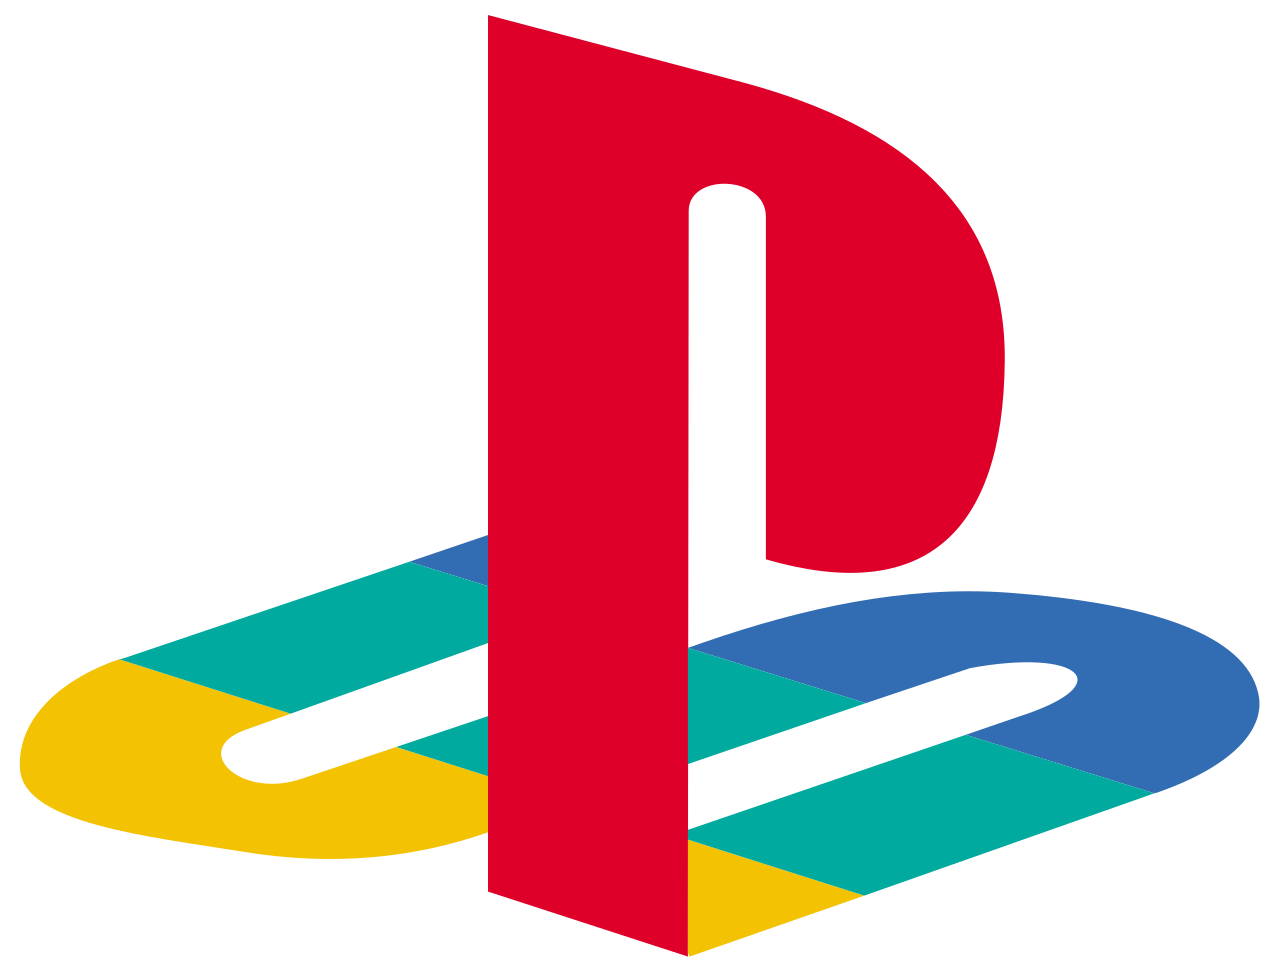 File:Playstation logo colour.svg - Wikipedia